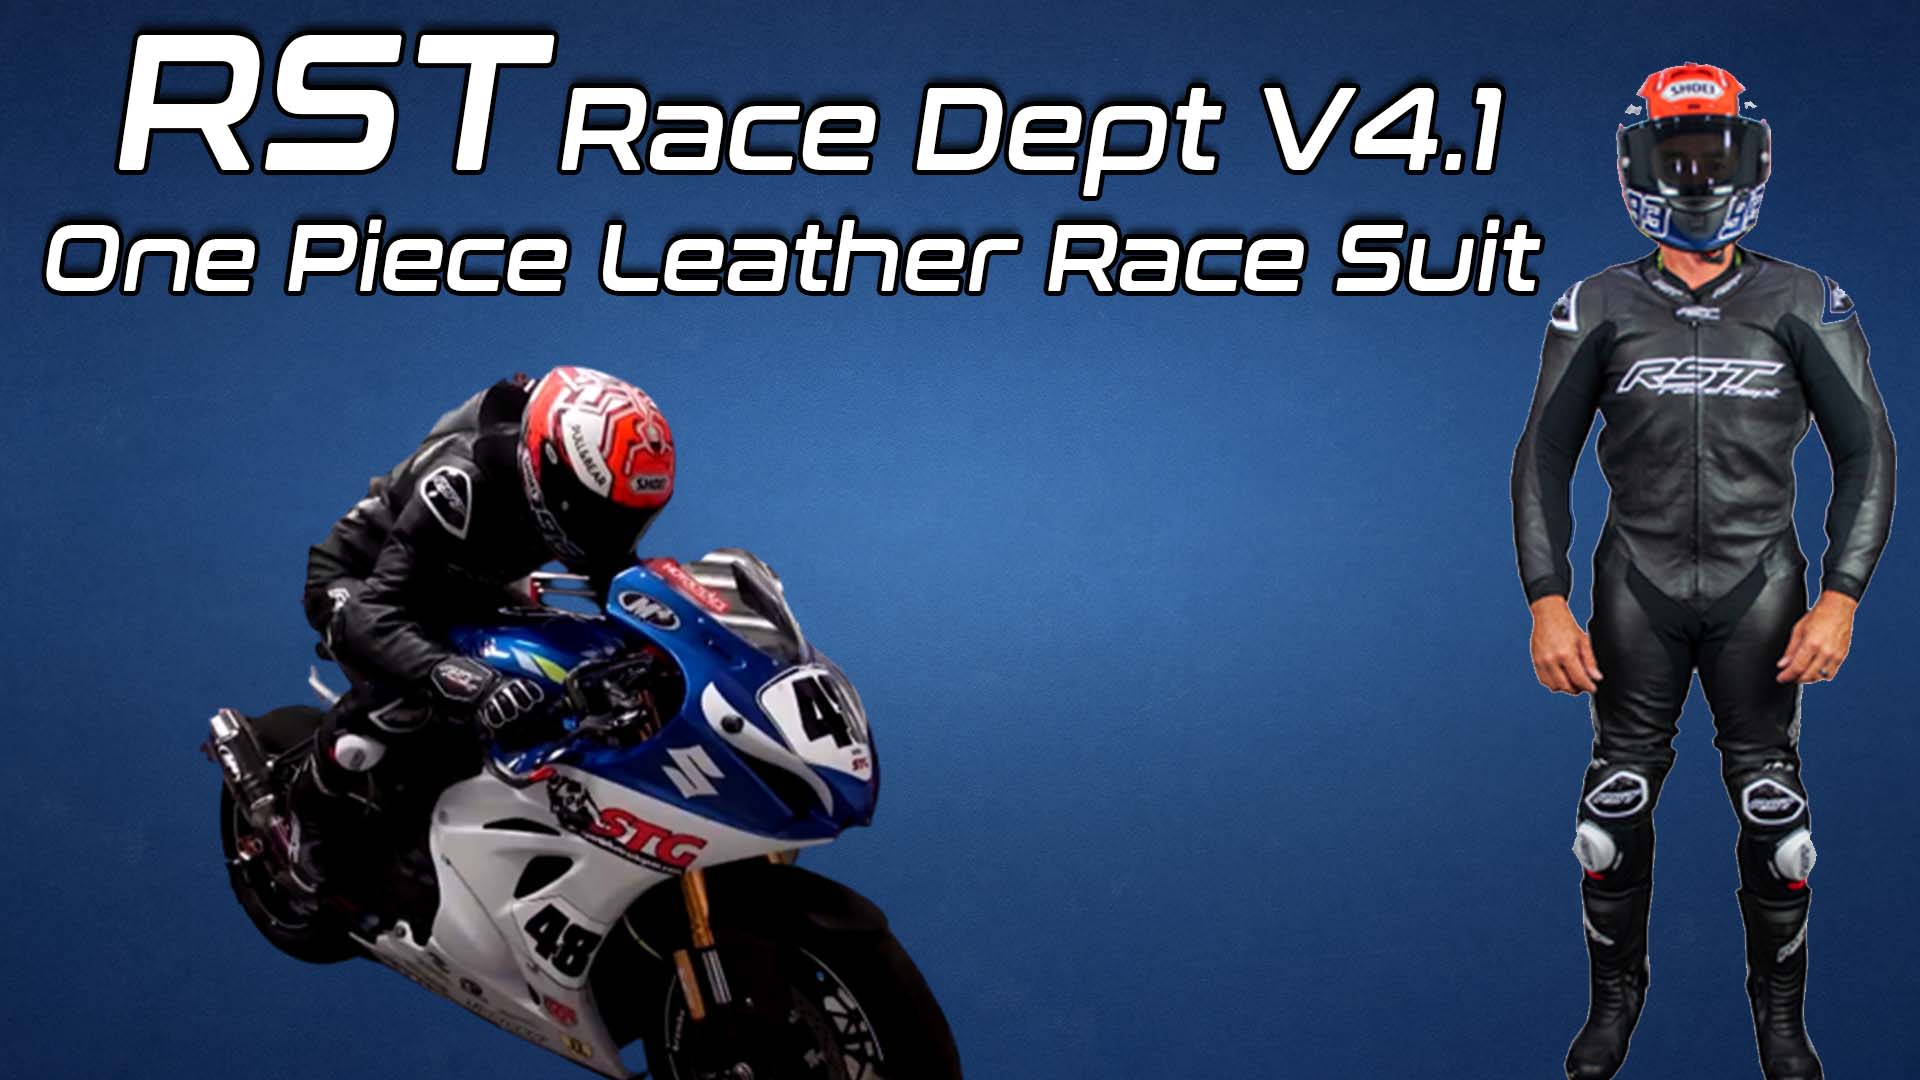 RST Race Dept V4.1 One Piece Leather Race Suit